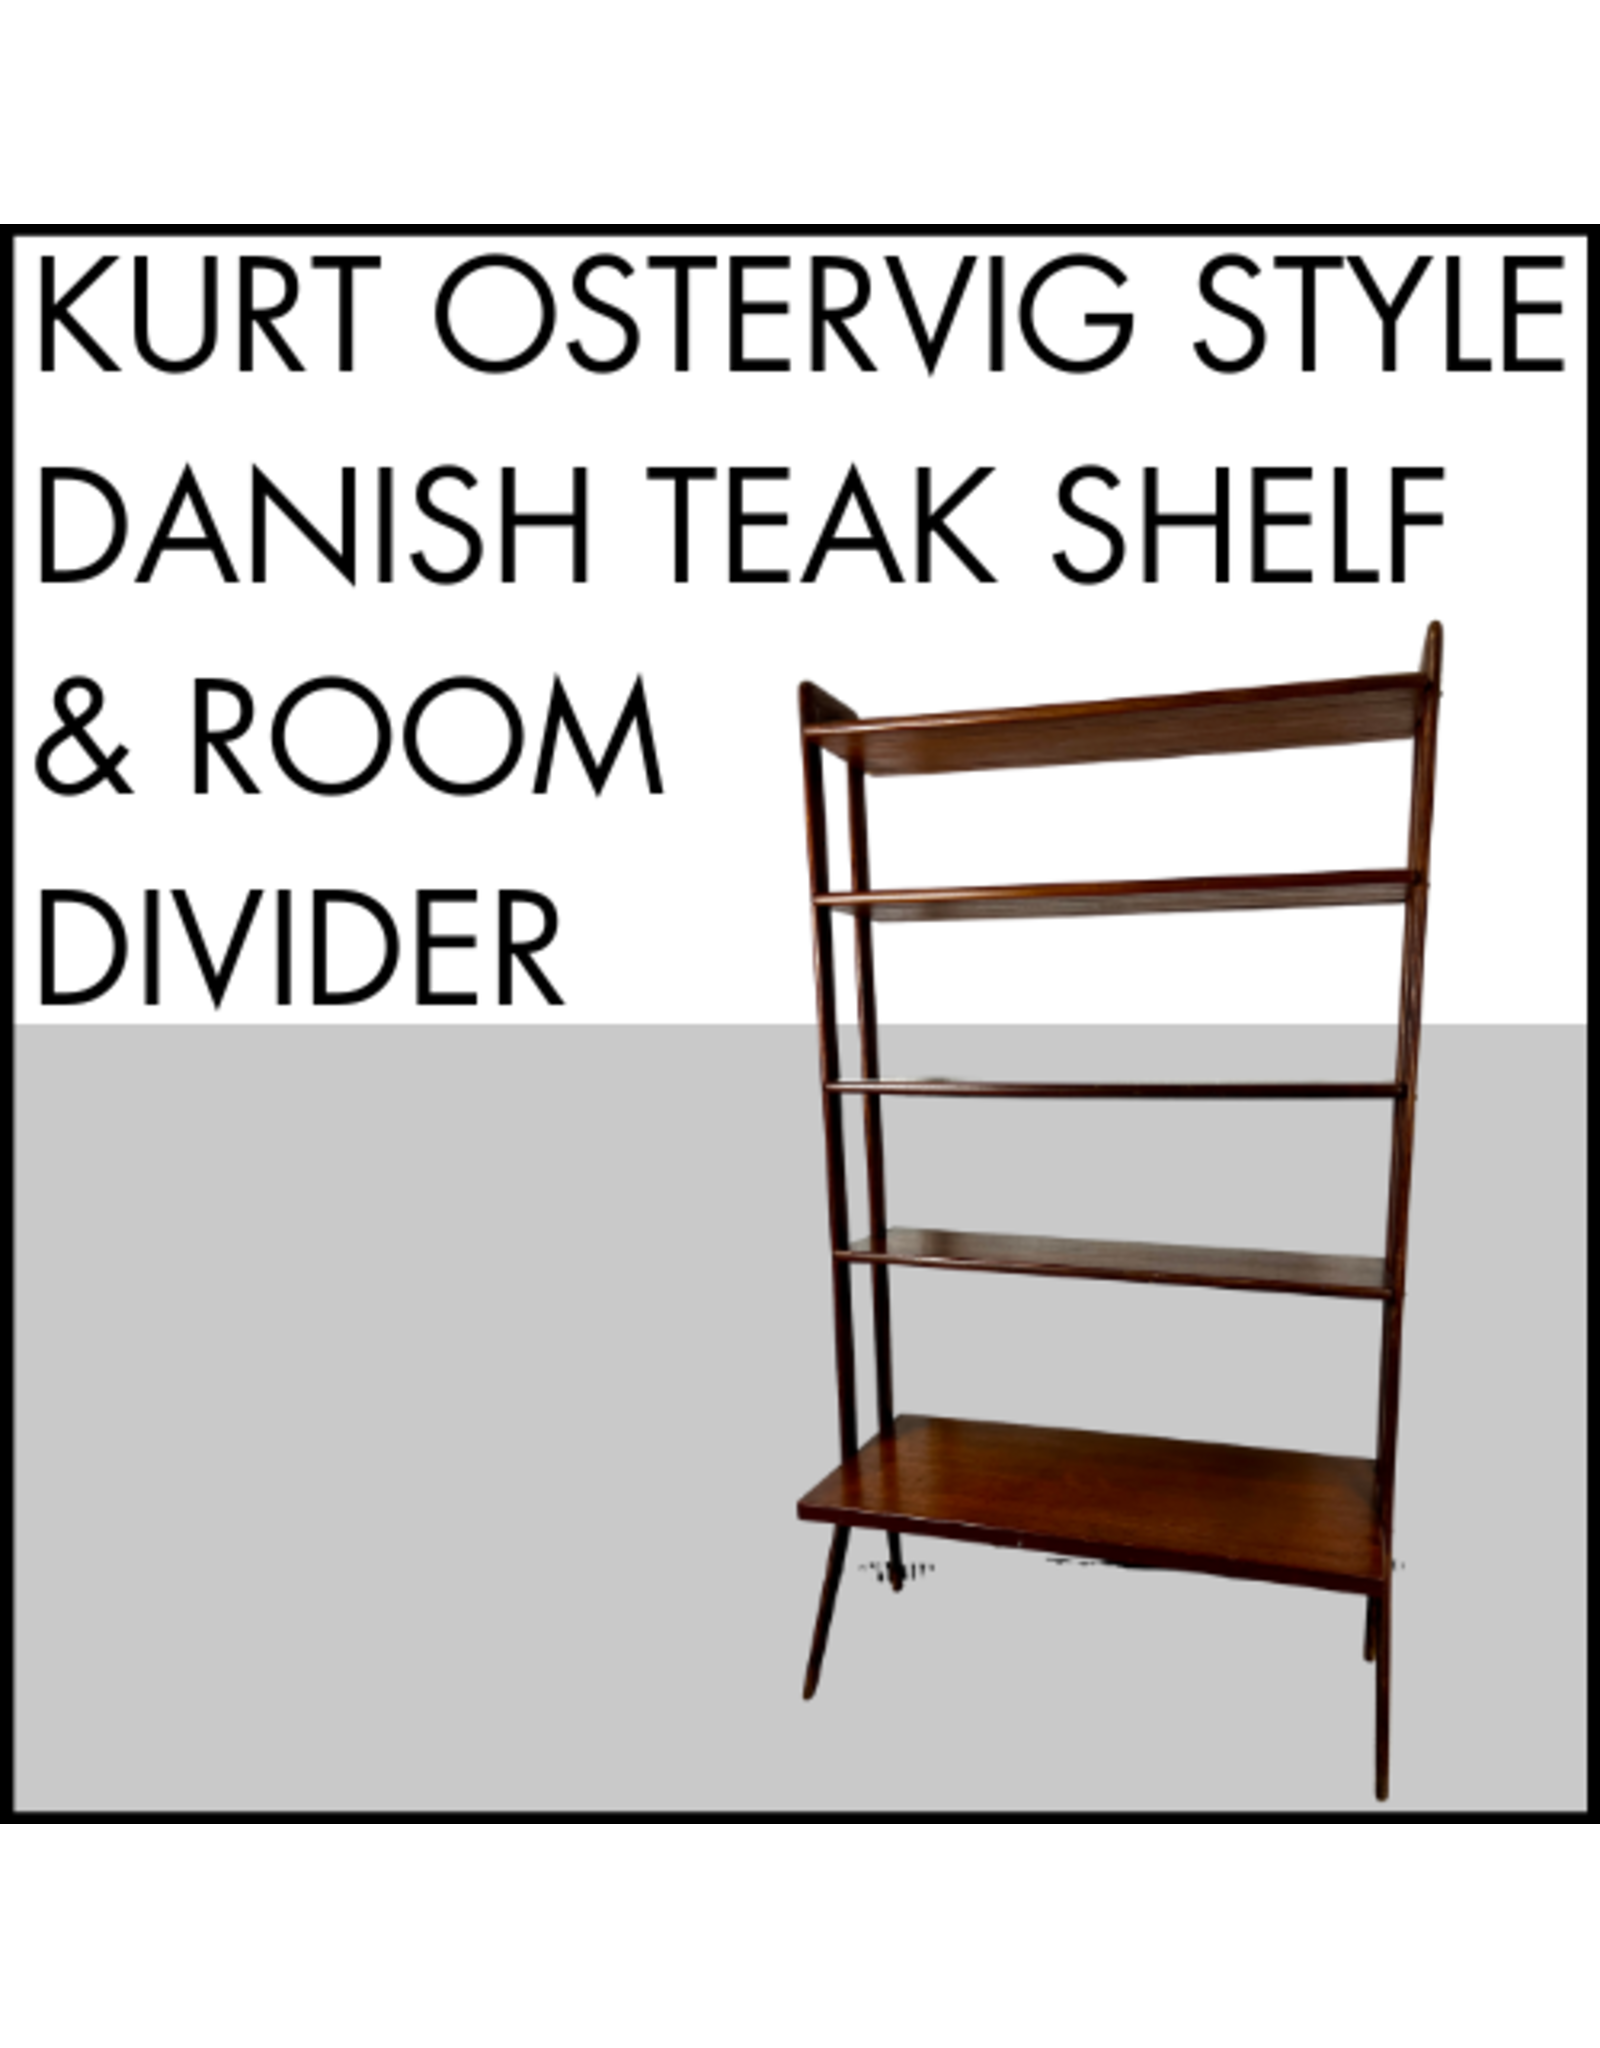 Kurt Ostervig Style Danish Teak Shelf & Room Divider